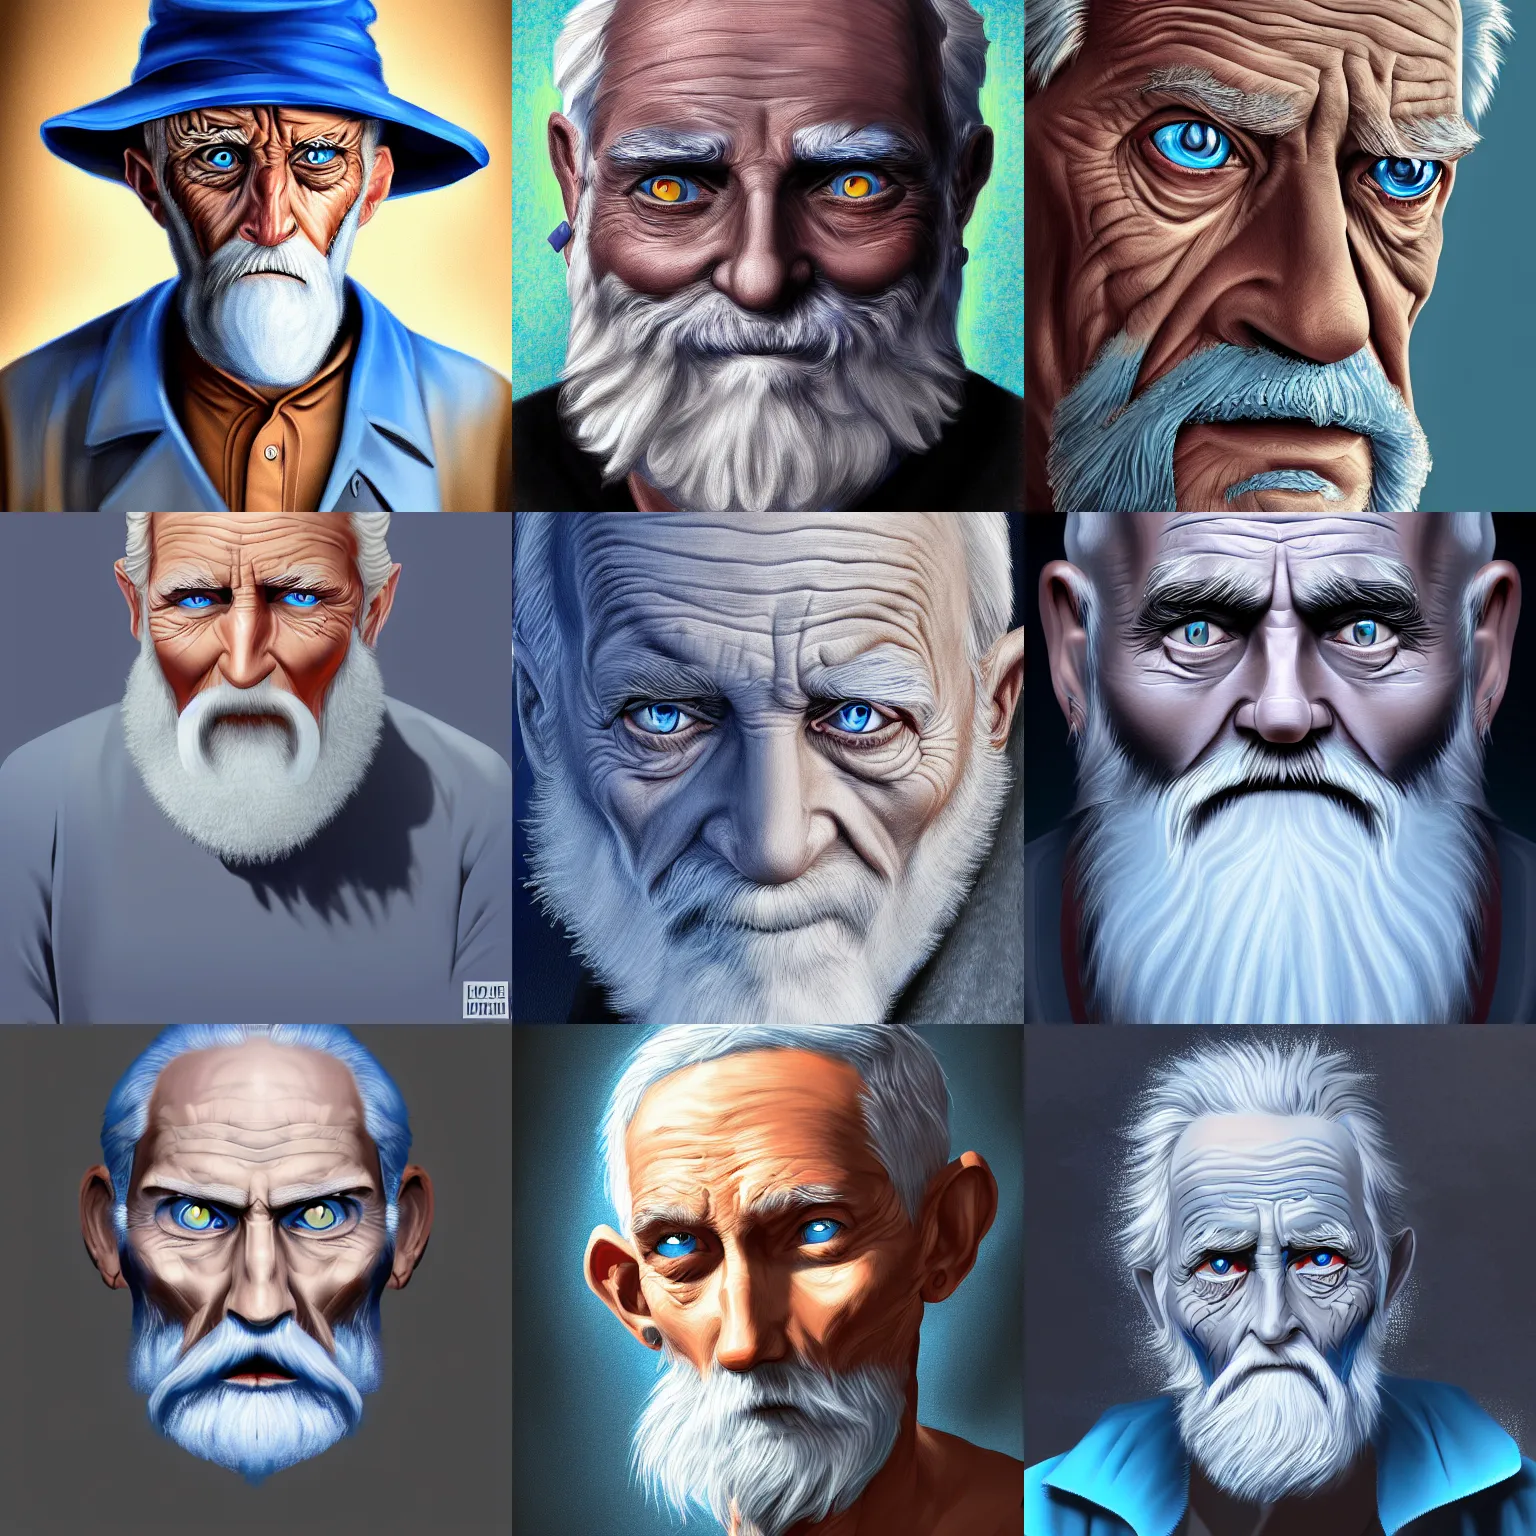 Prompt: Old man blue eyes mighty looking, digital painting, lots of details, 4k